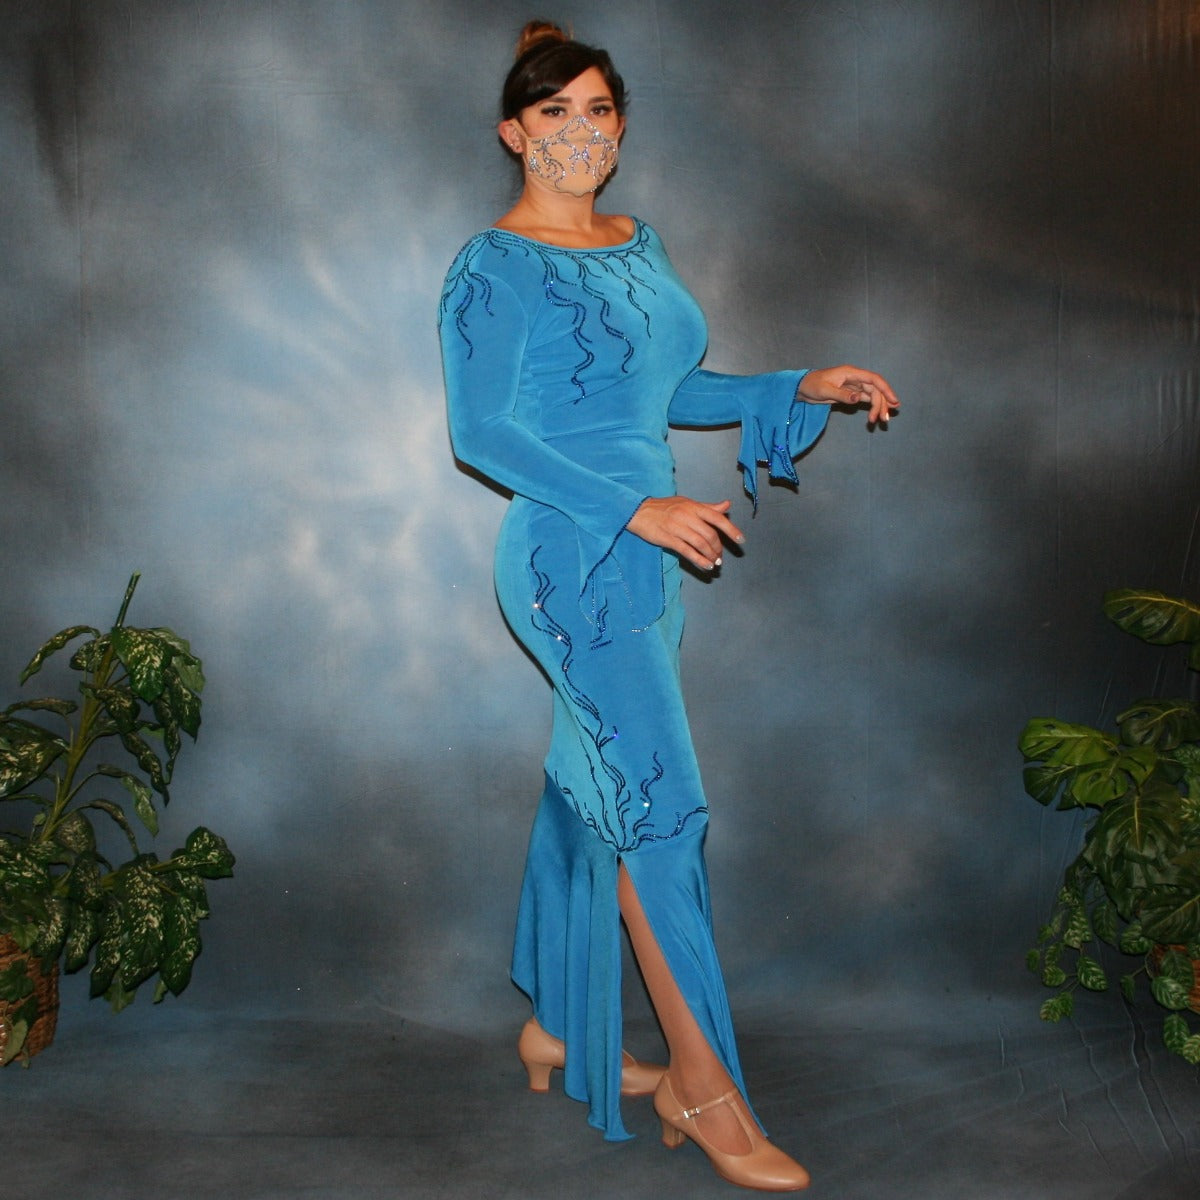 Crystal's Creations side view of blue slinky Latin/rhythm dress with detailed blue Swarovski rhinestone work